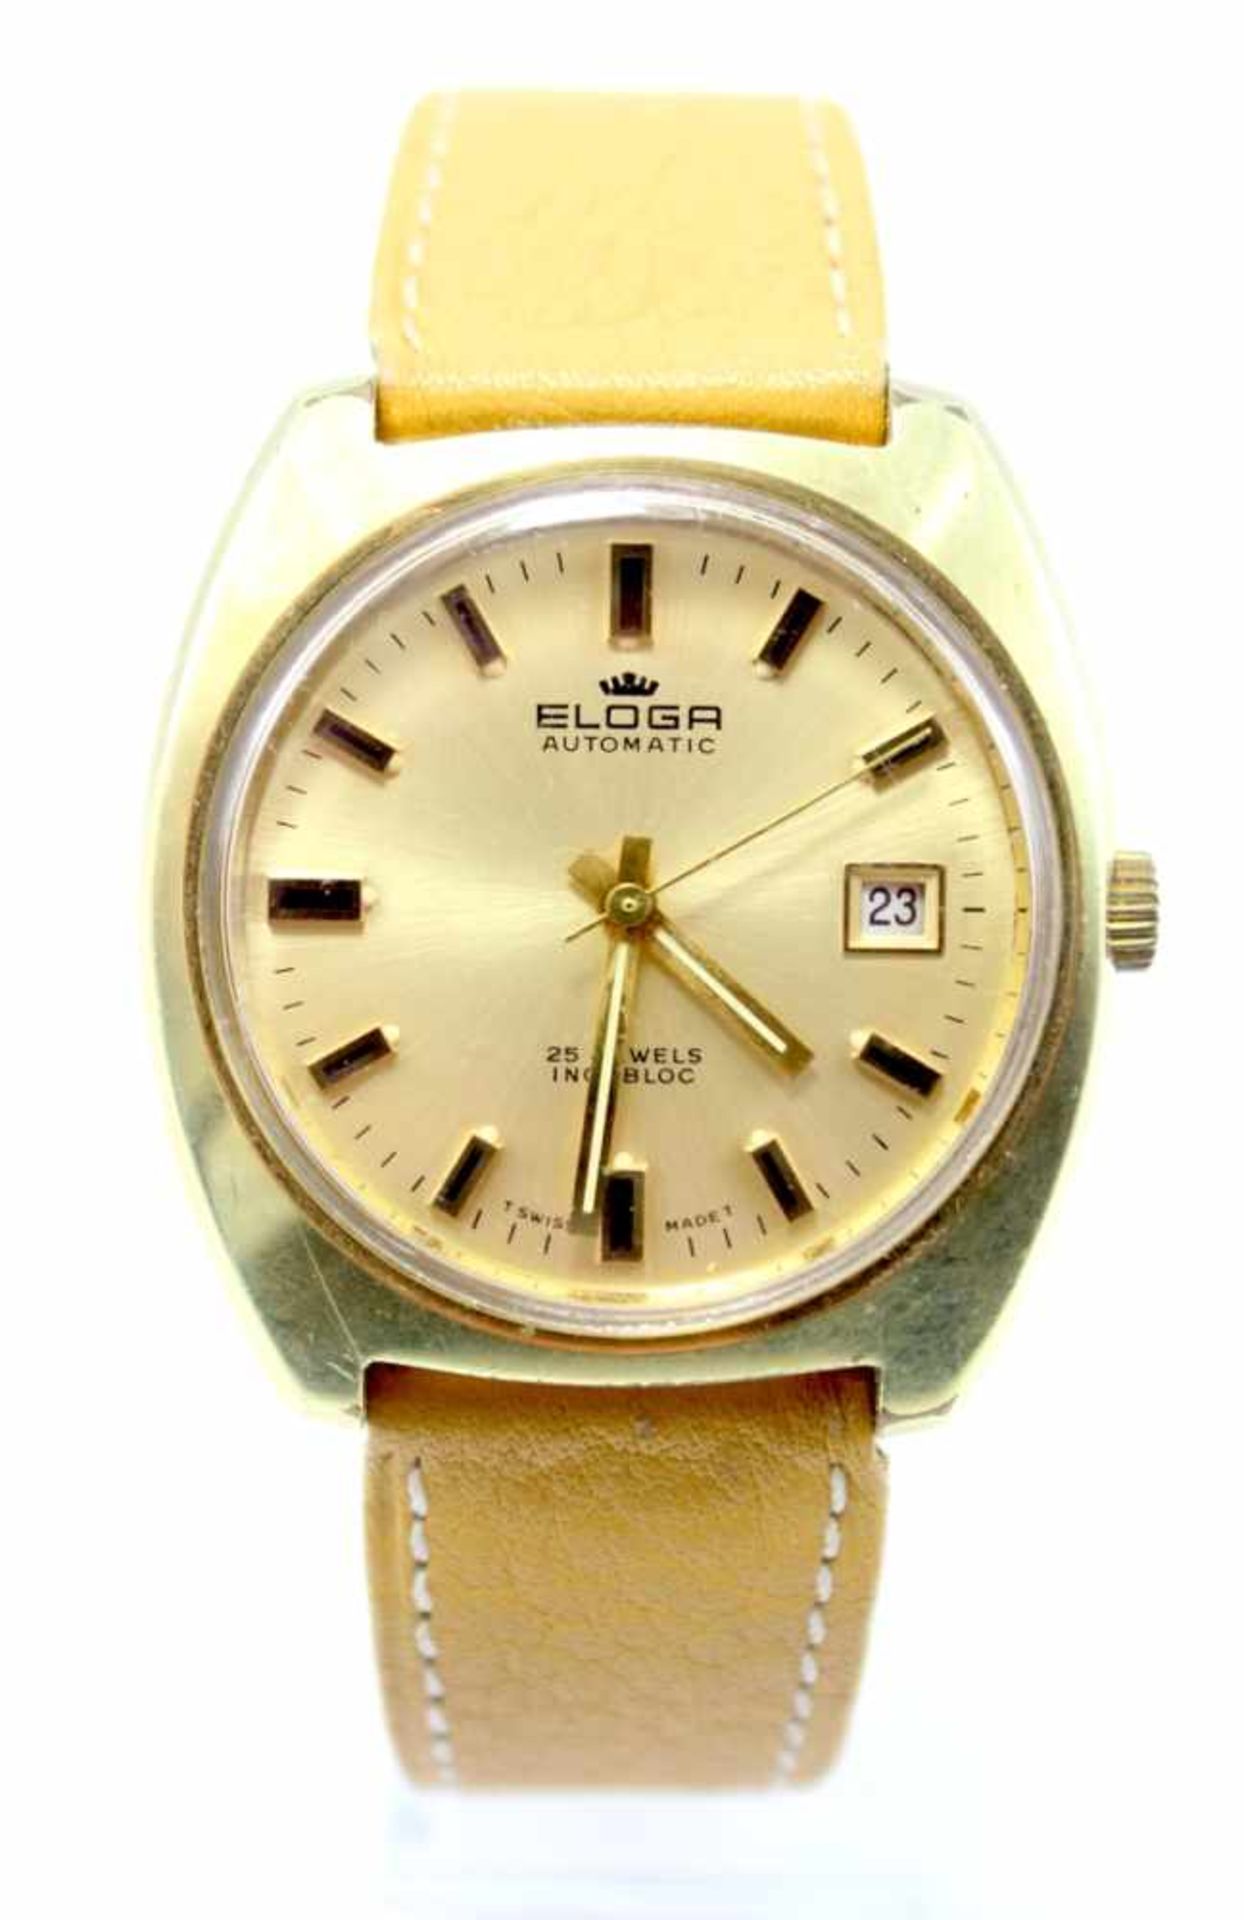 Armbanduhr - Marke Eloga Automatic 25 Jewels Incabloc, Stahlgehäuse No. 6290, goldfarbenes